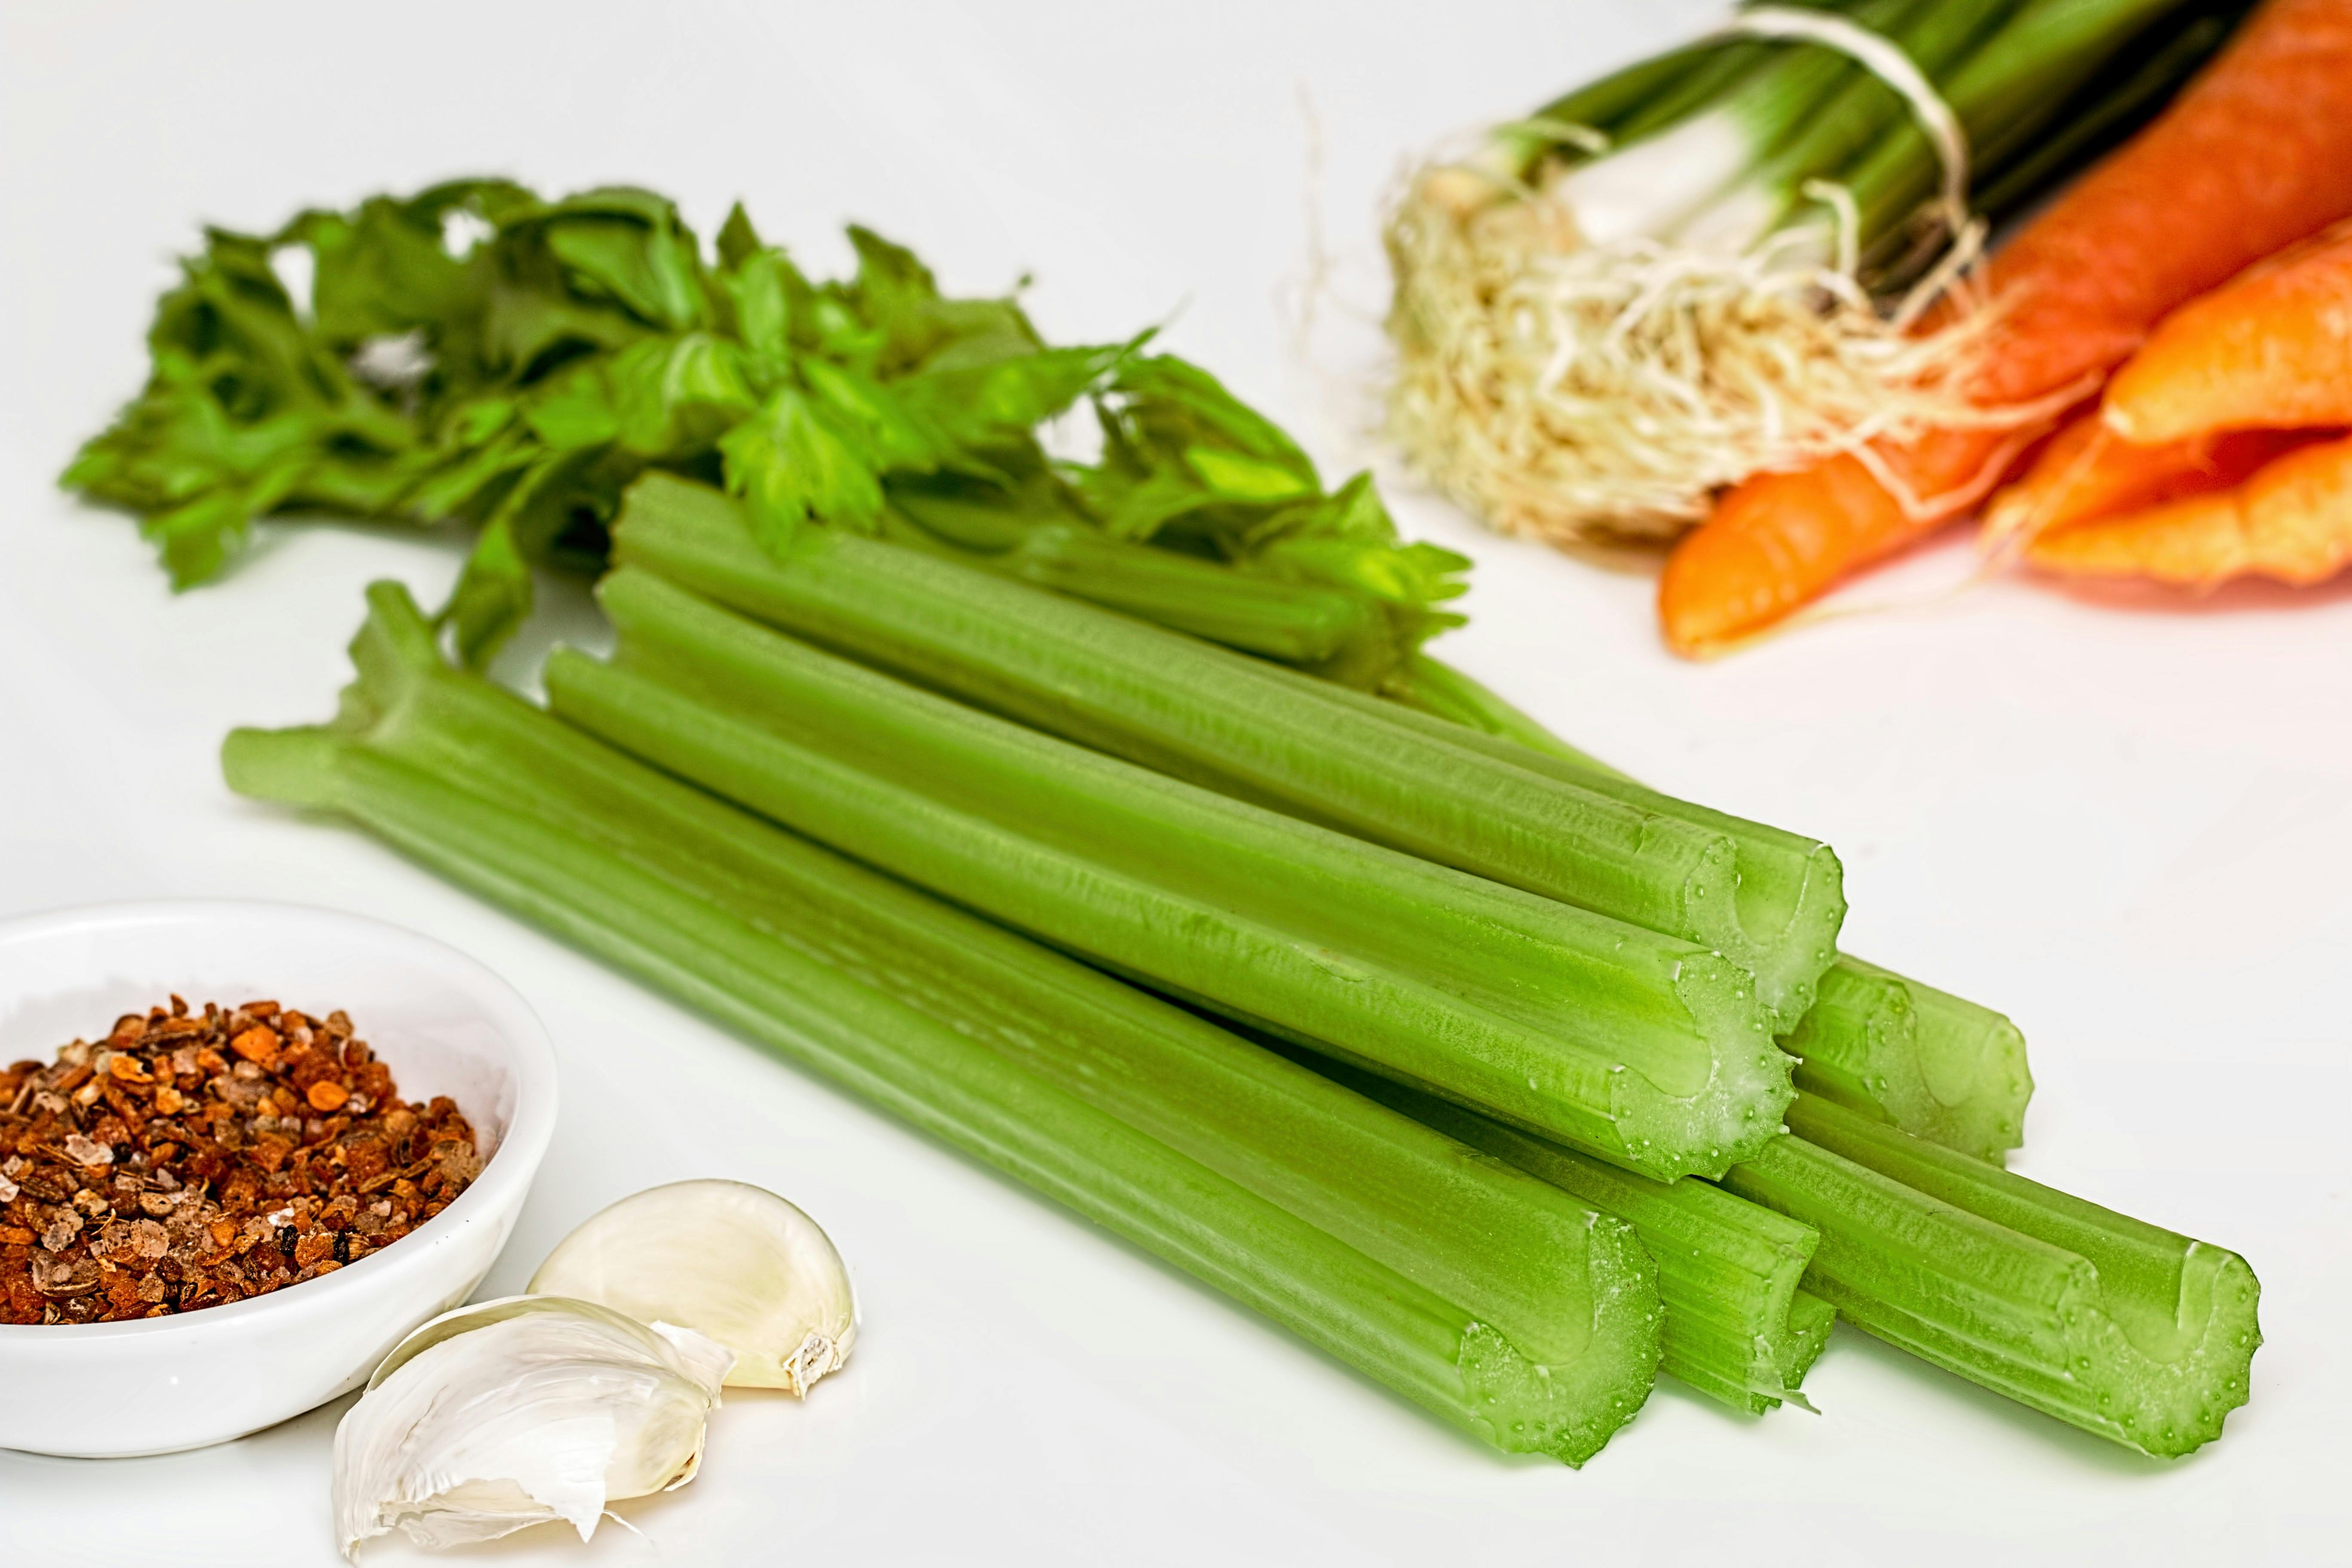 https://static.pexels.com/photos/34494/soup-greens-celery-vegetables-food.jpg